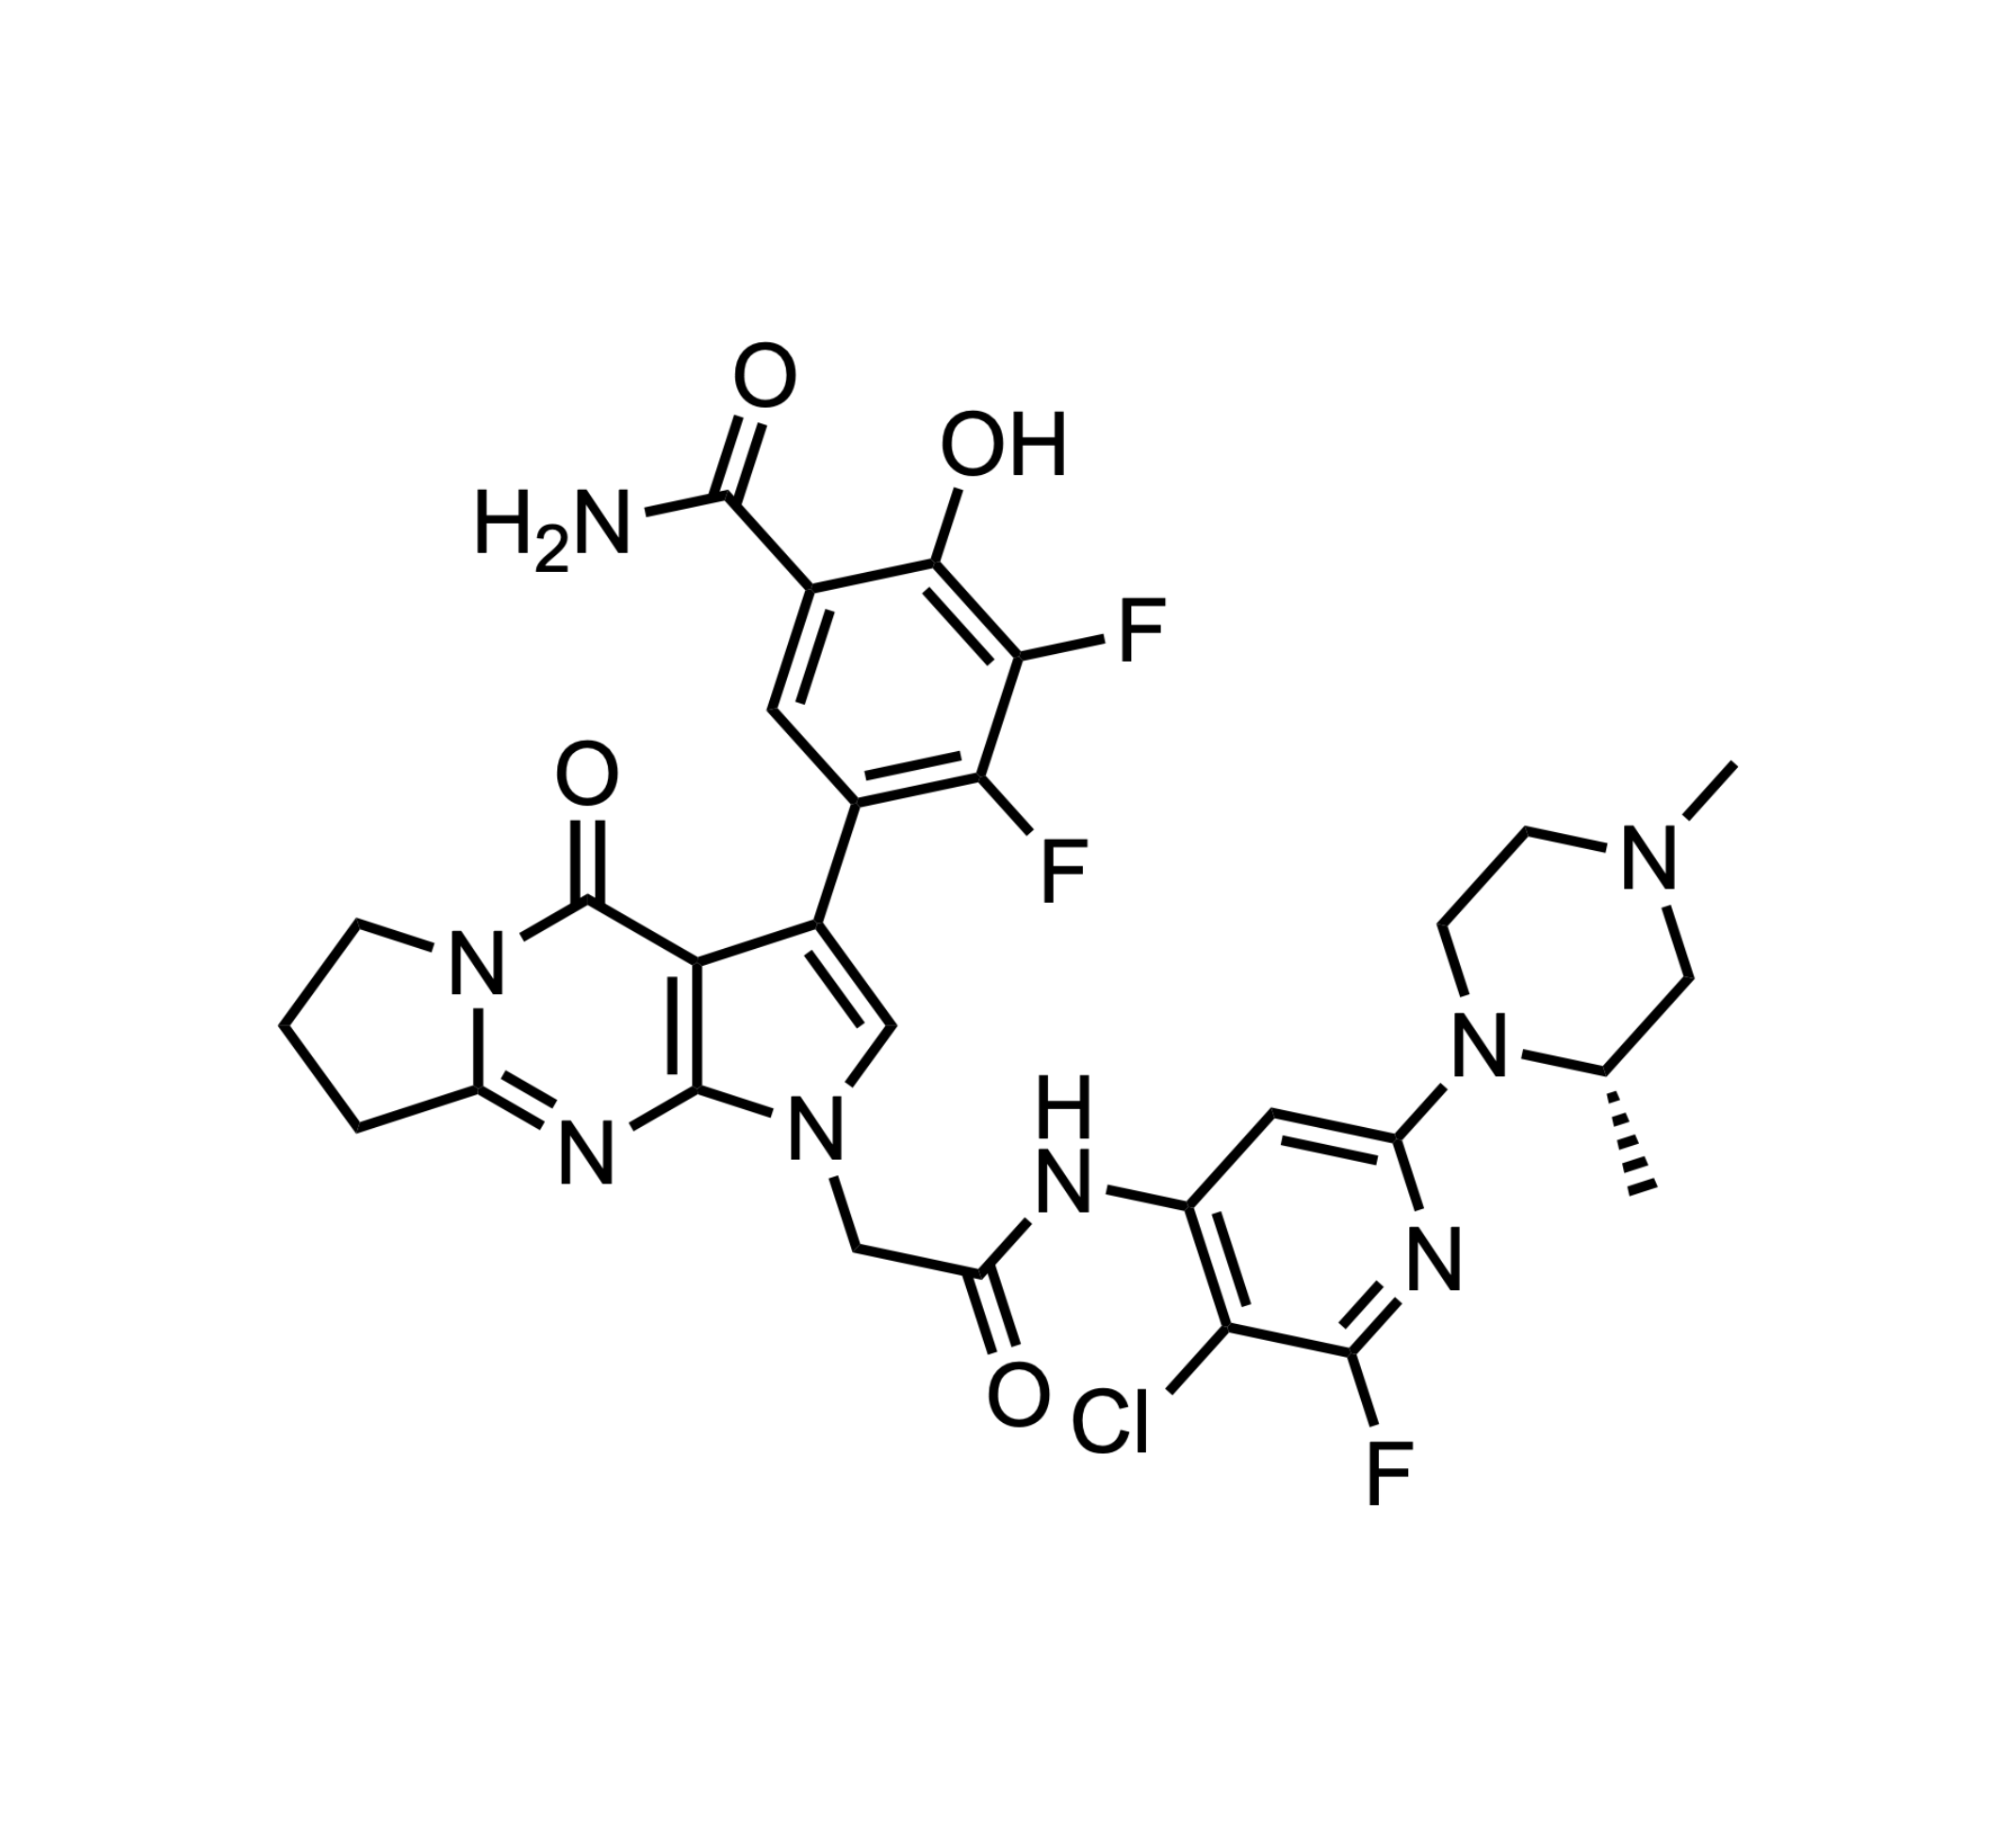 JNJ-65234637 chemical structure oral BCL6 BTB inhibitor - OICR, Toronto, CA (Janssen)|||